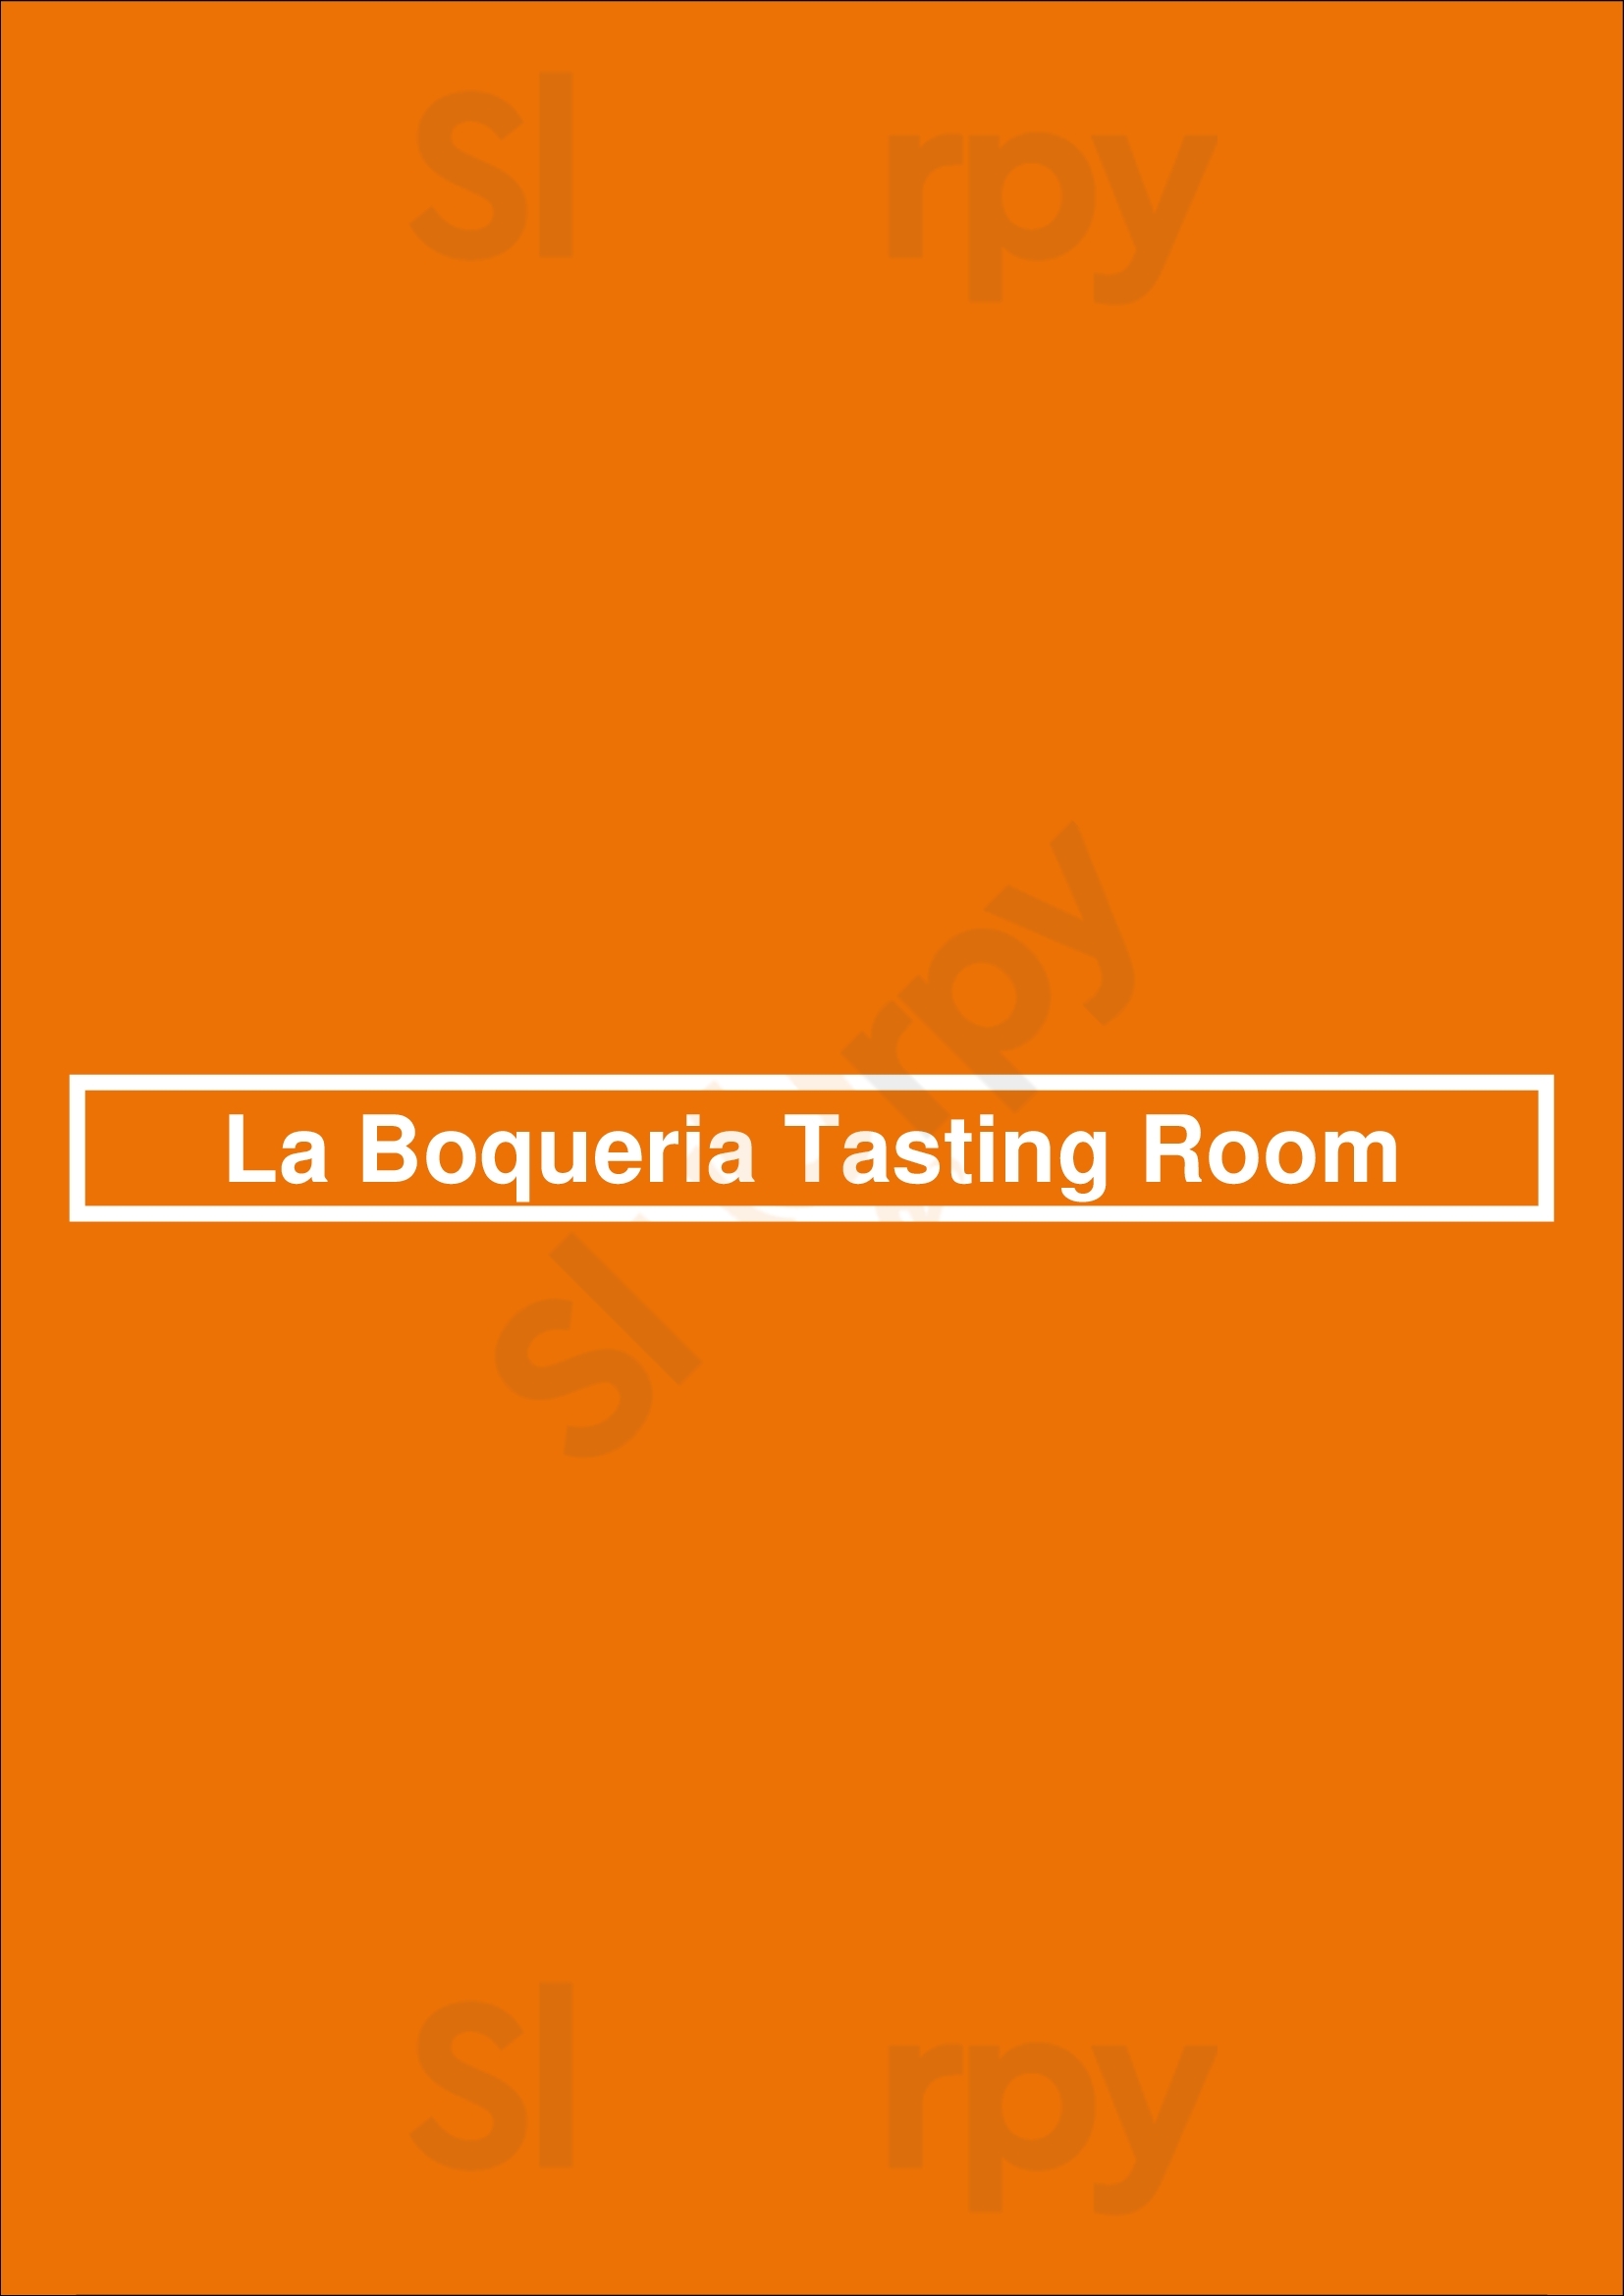 La Boqueria Tasting Room Vancouver Menu - 1